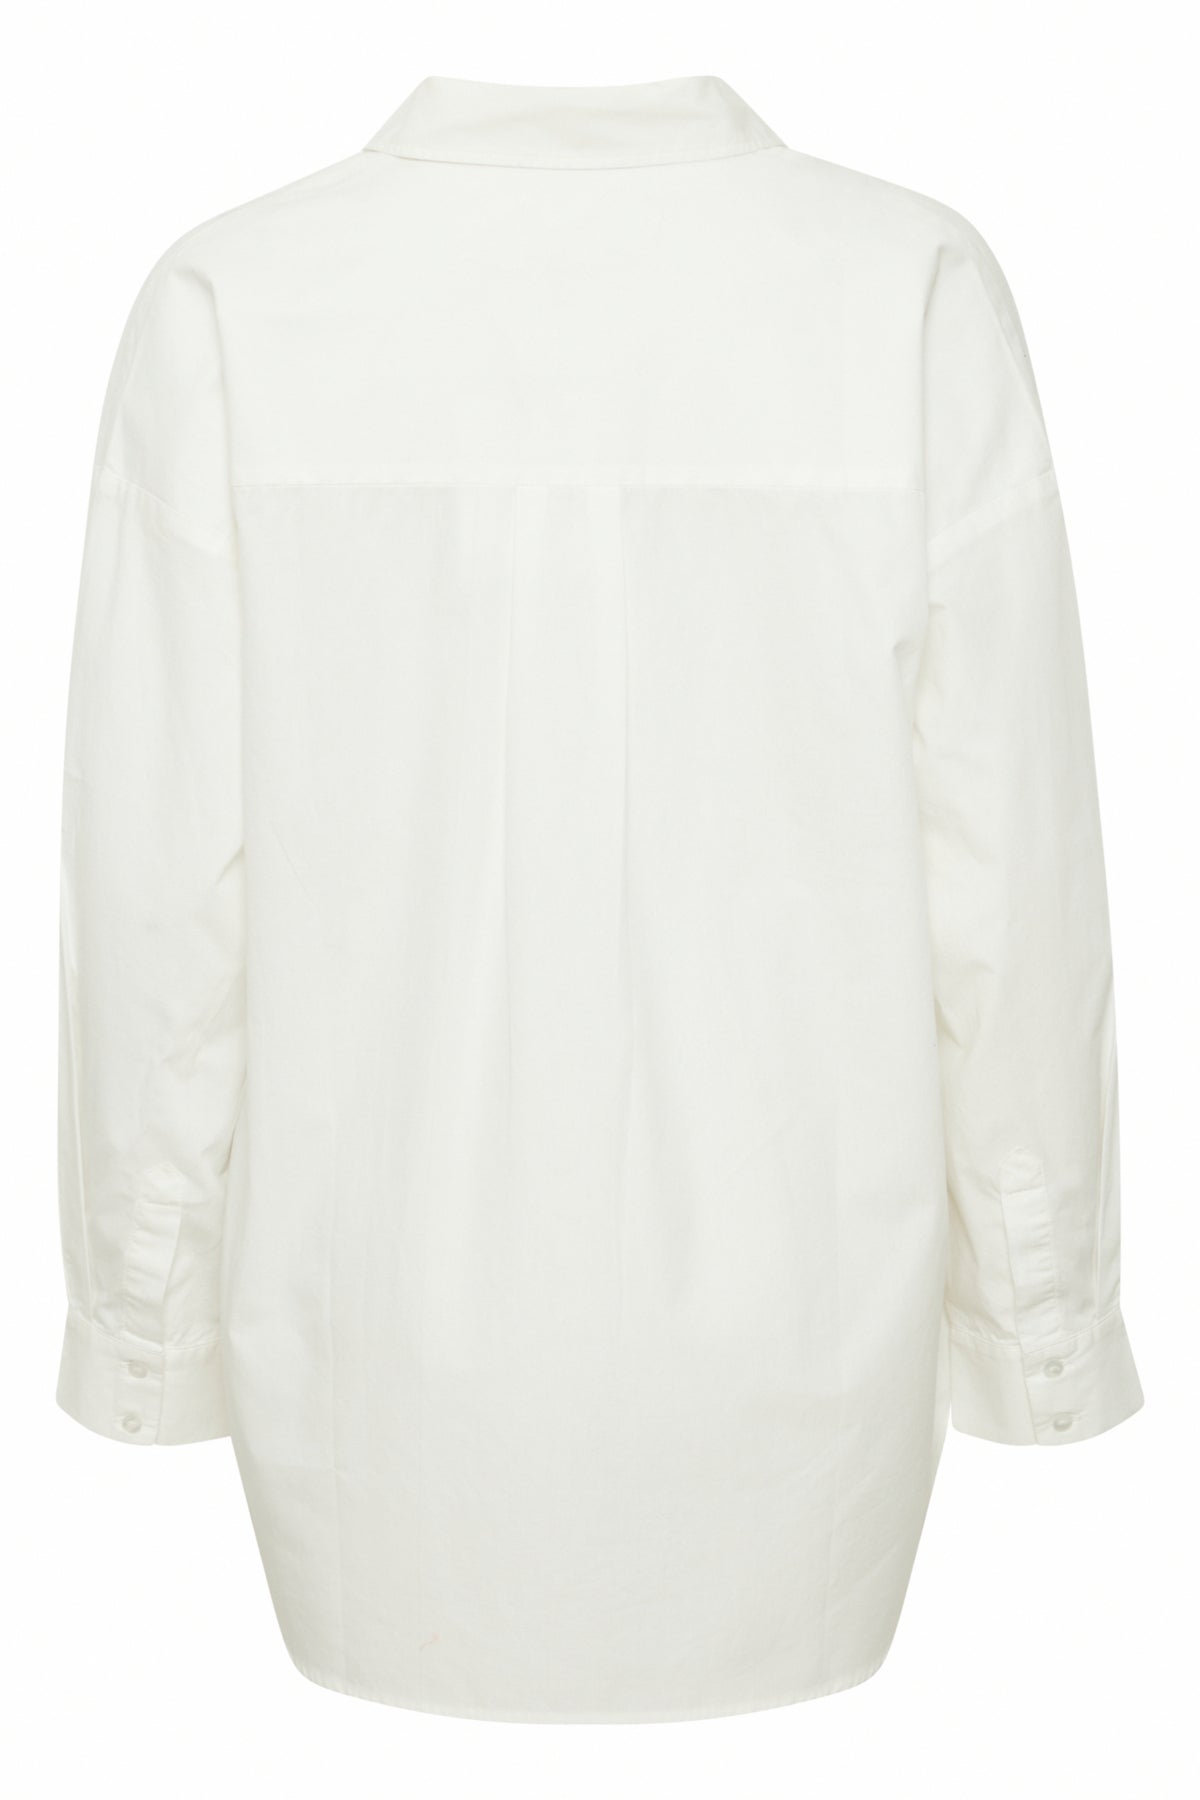 Camisa blanca holgada COOL